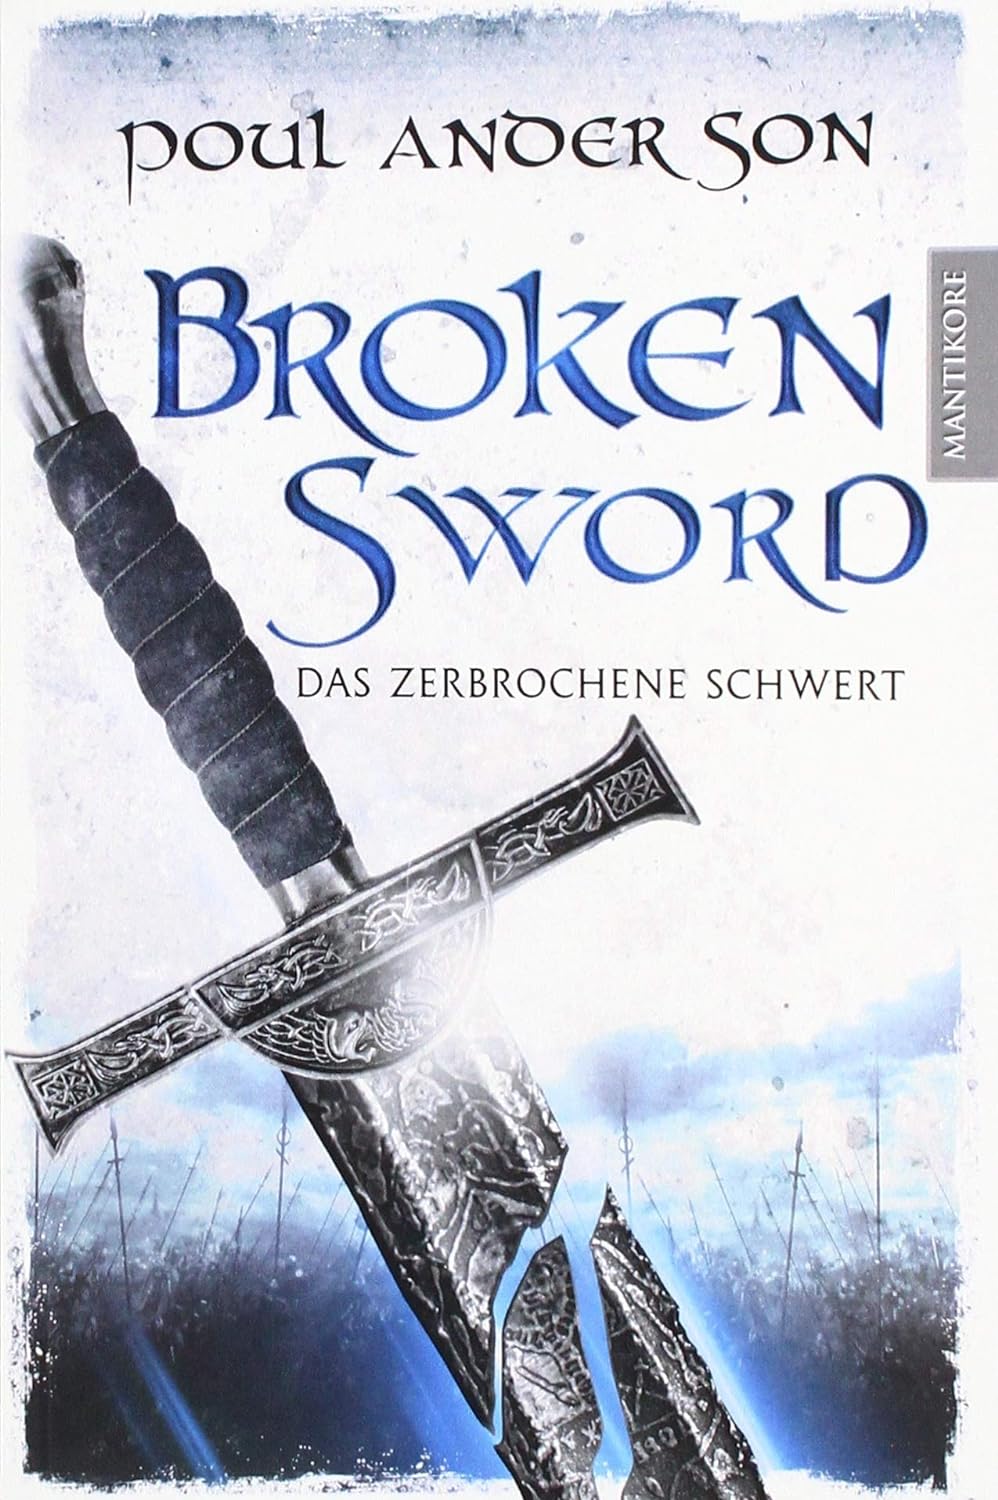 Poul Anderson: Broken Sword - Broken Sword - Das zerbrochene Schwert (Paperback, Deutsch language, 2019, Mantikore Verlag)